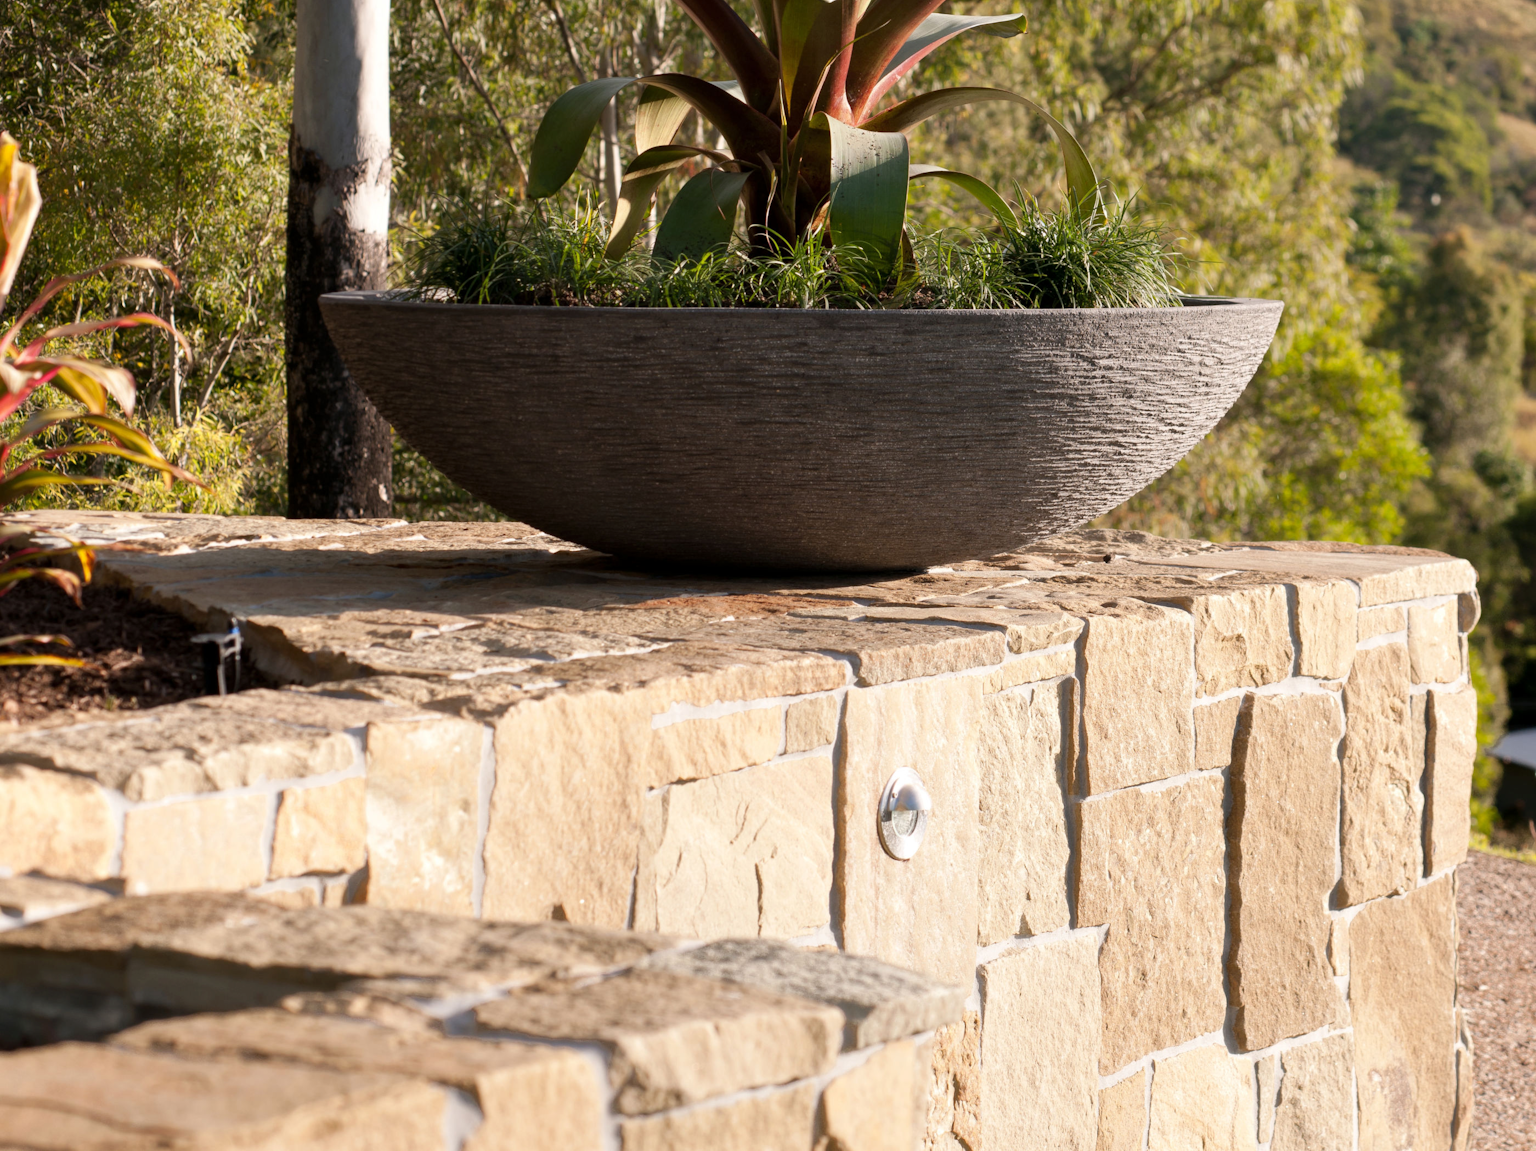 Clancy sandstone random ashlar retaining wall with planter on top